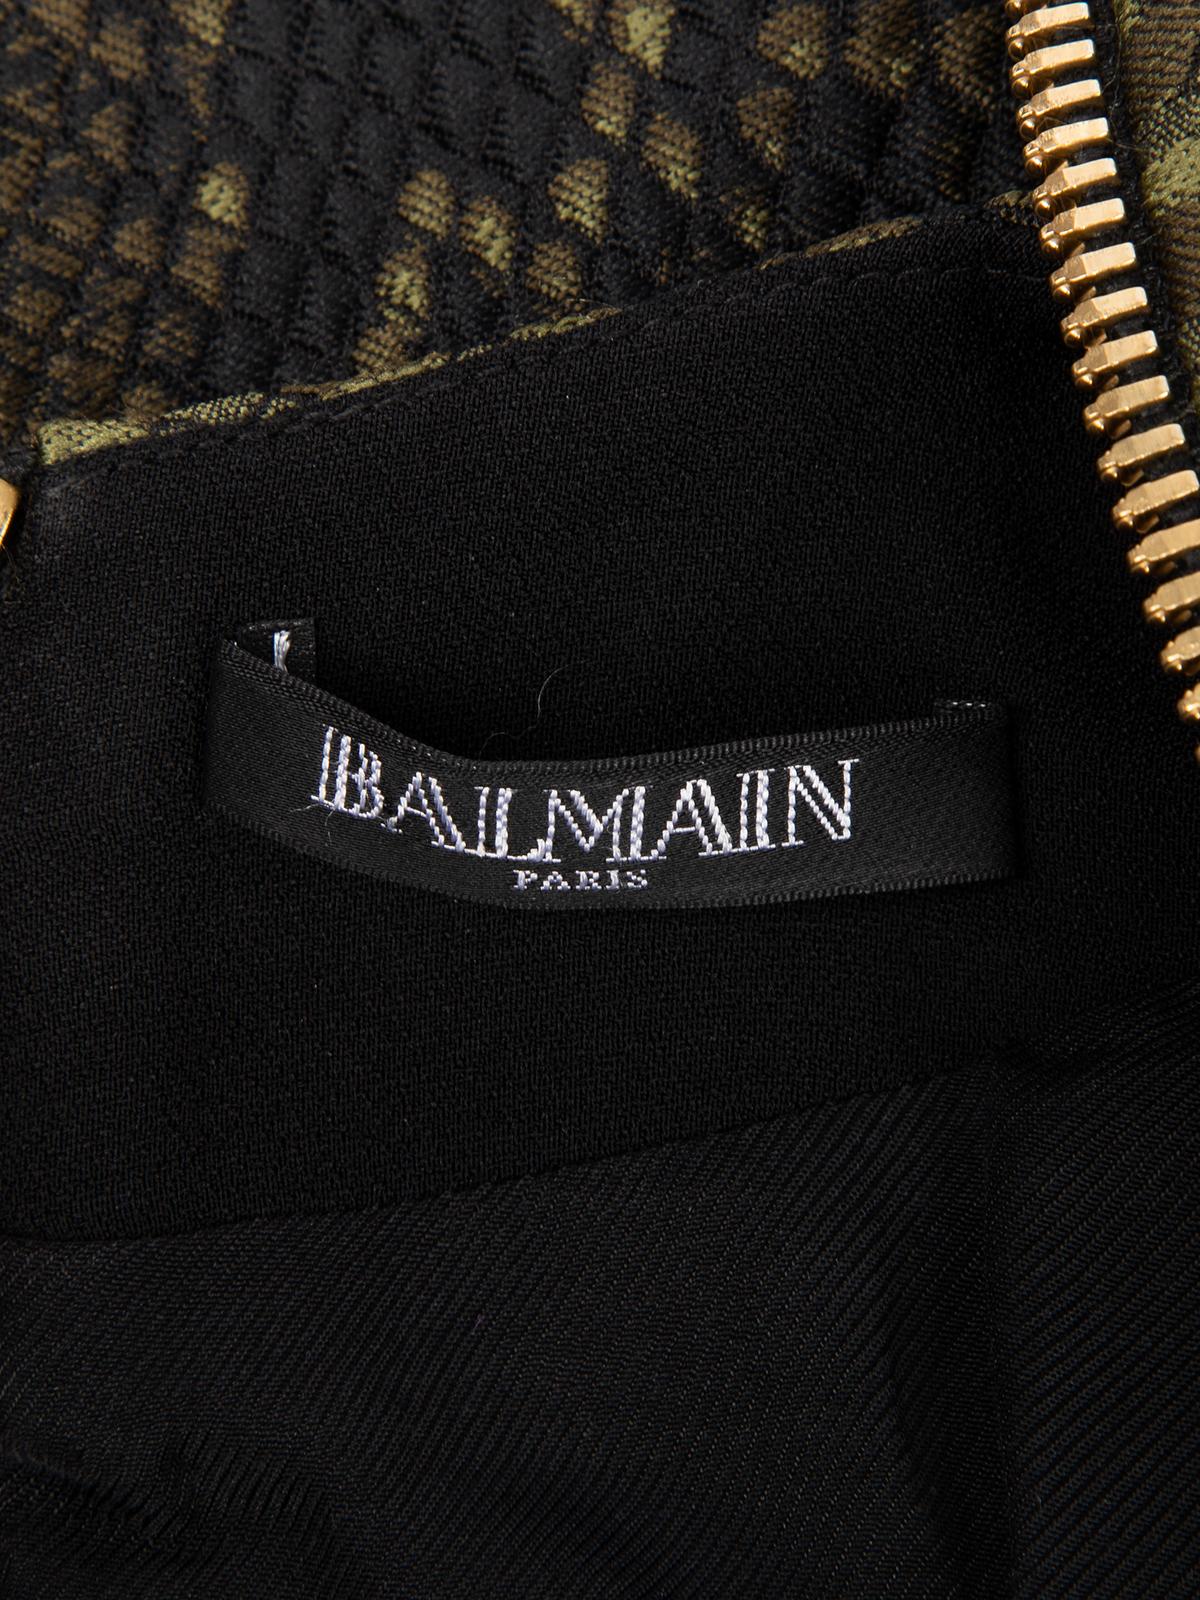 Black Pre-Loved Balmain Women's Snakeskin Top For Sale